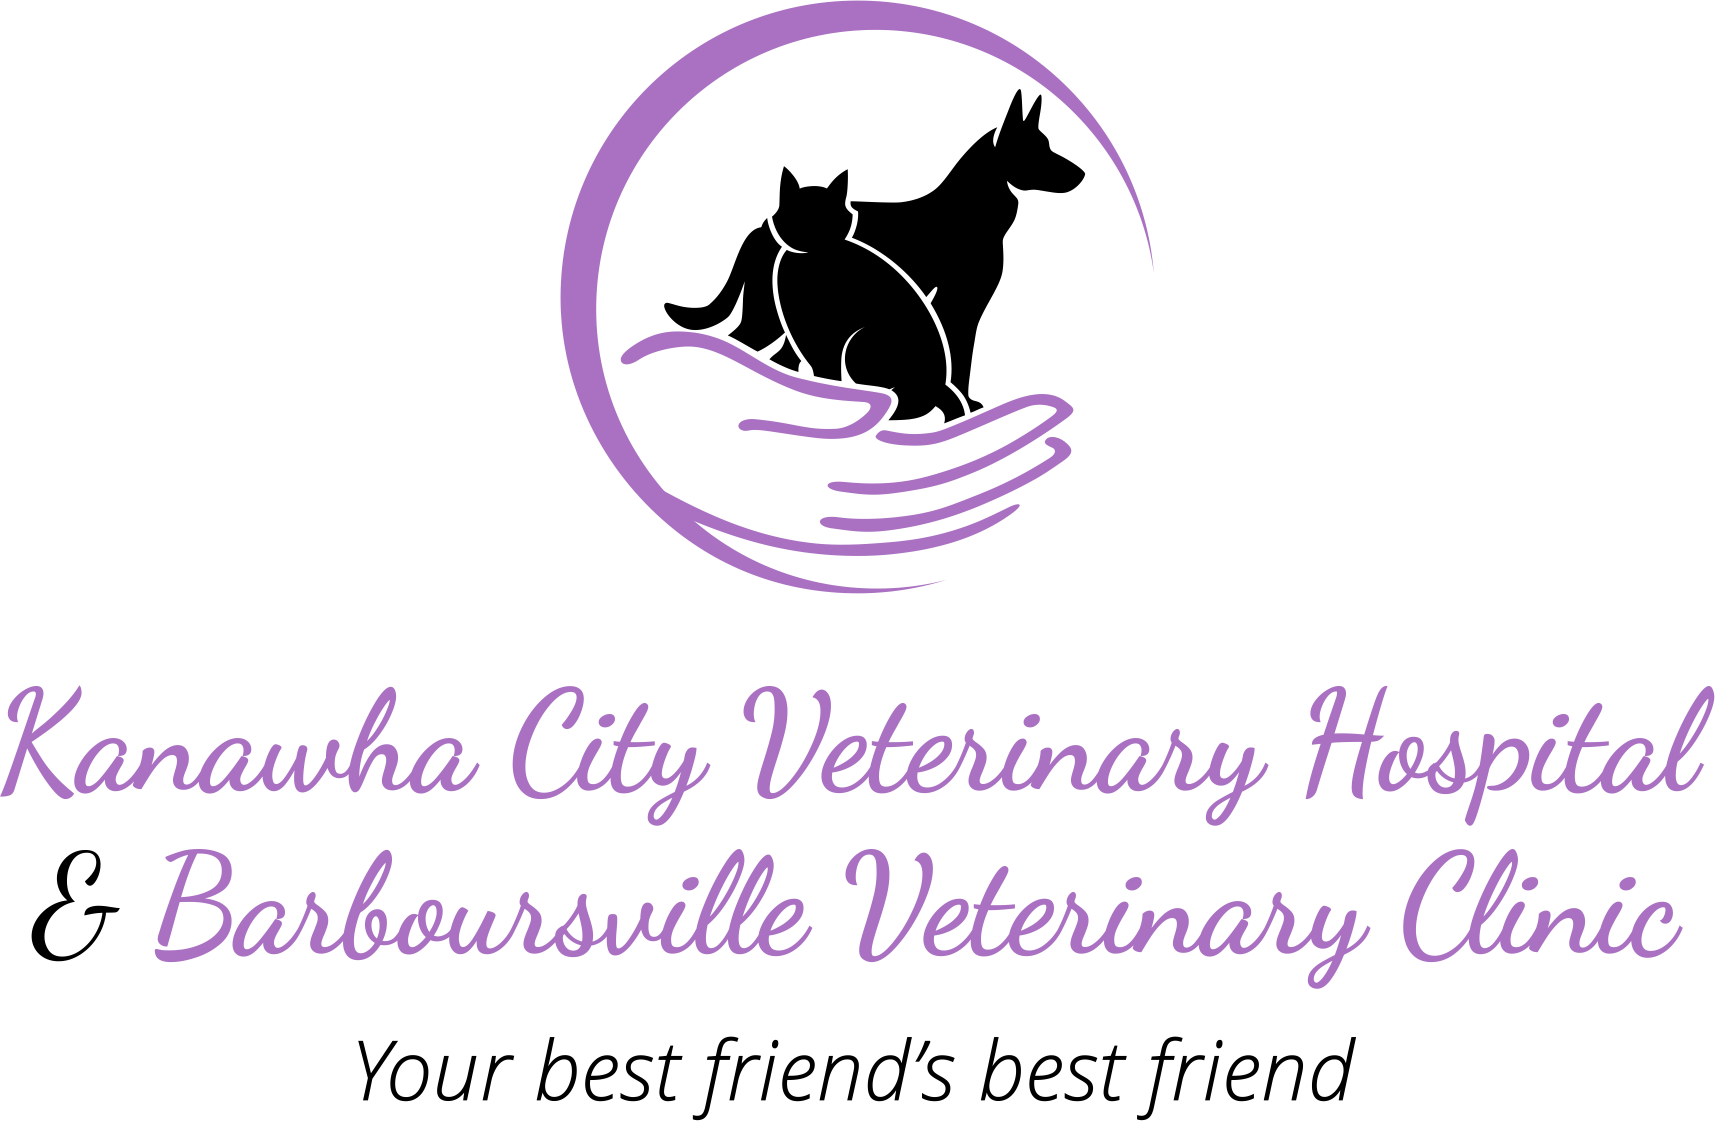 Kanawha City Veterinary Hospital and Barboursville Veterinary Clinic